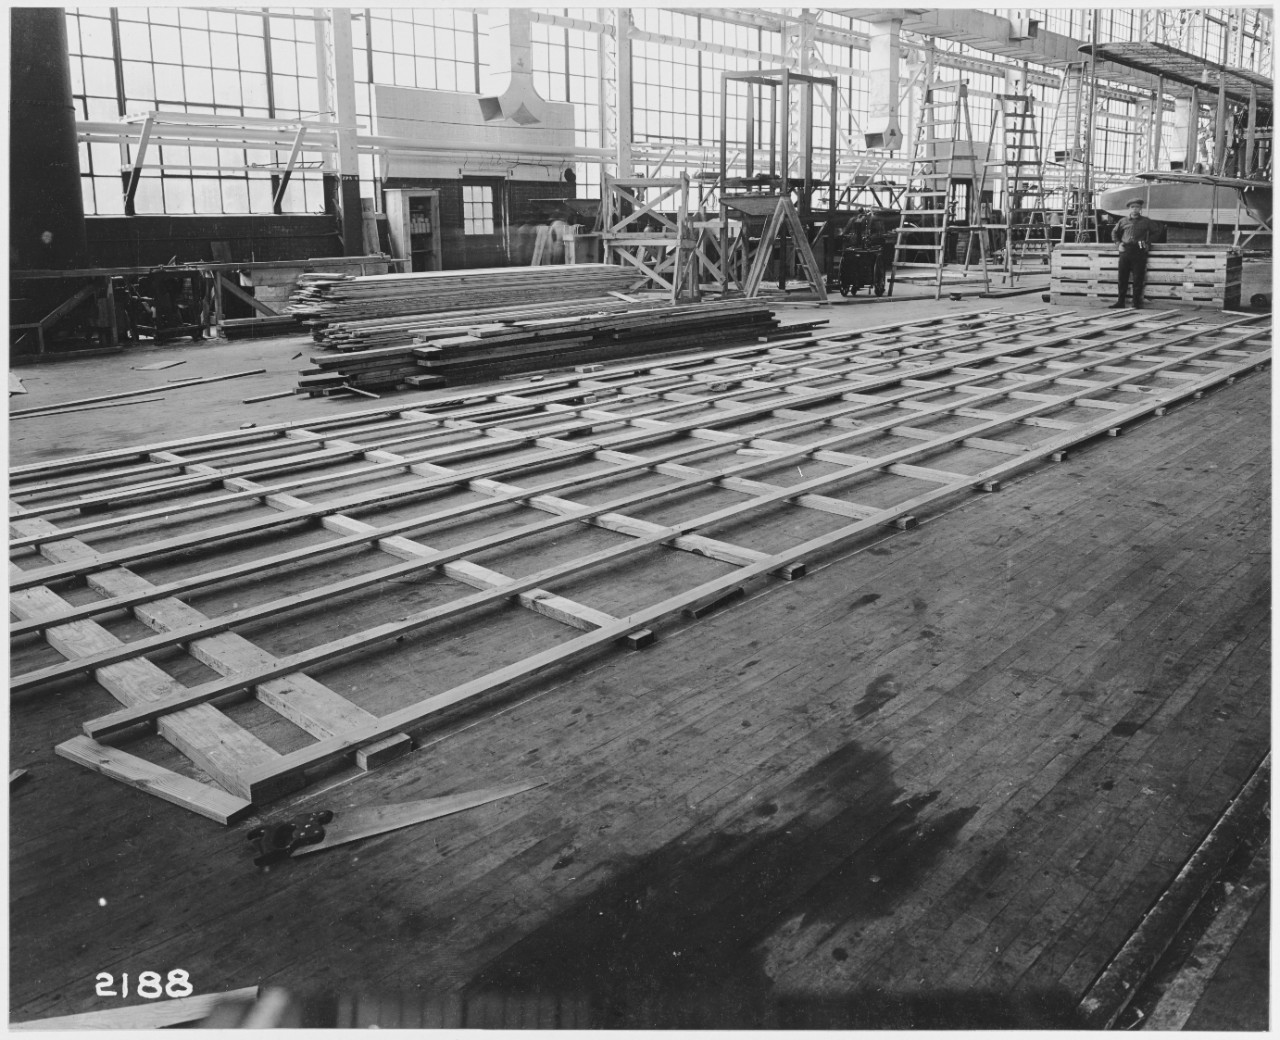 1050 N.A.F.C-1 Boat Hull Packing